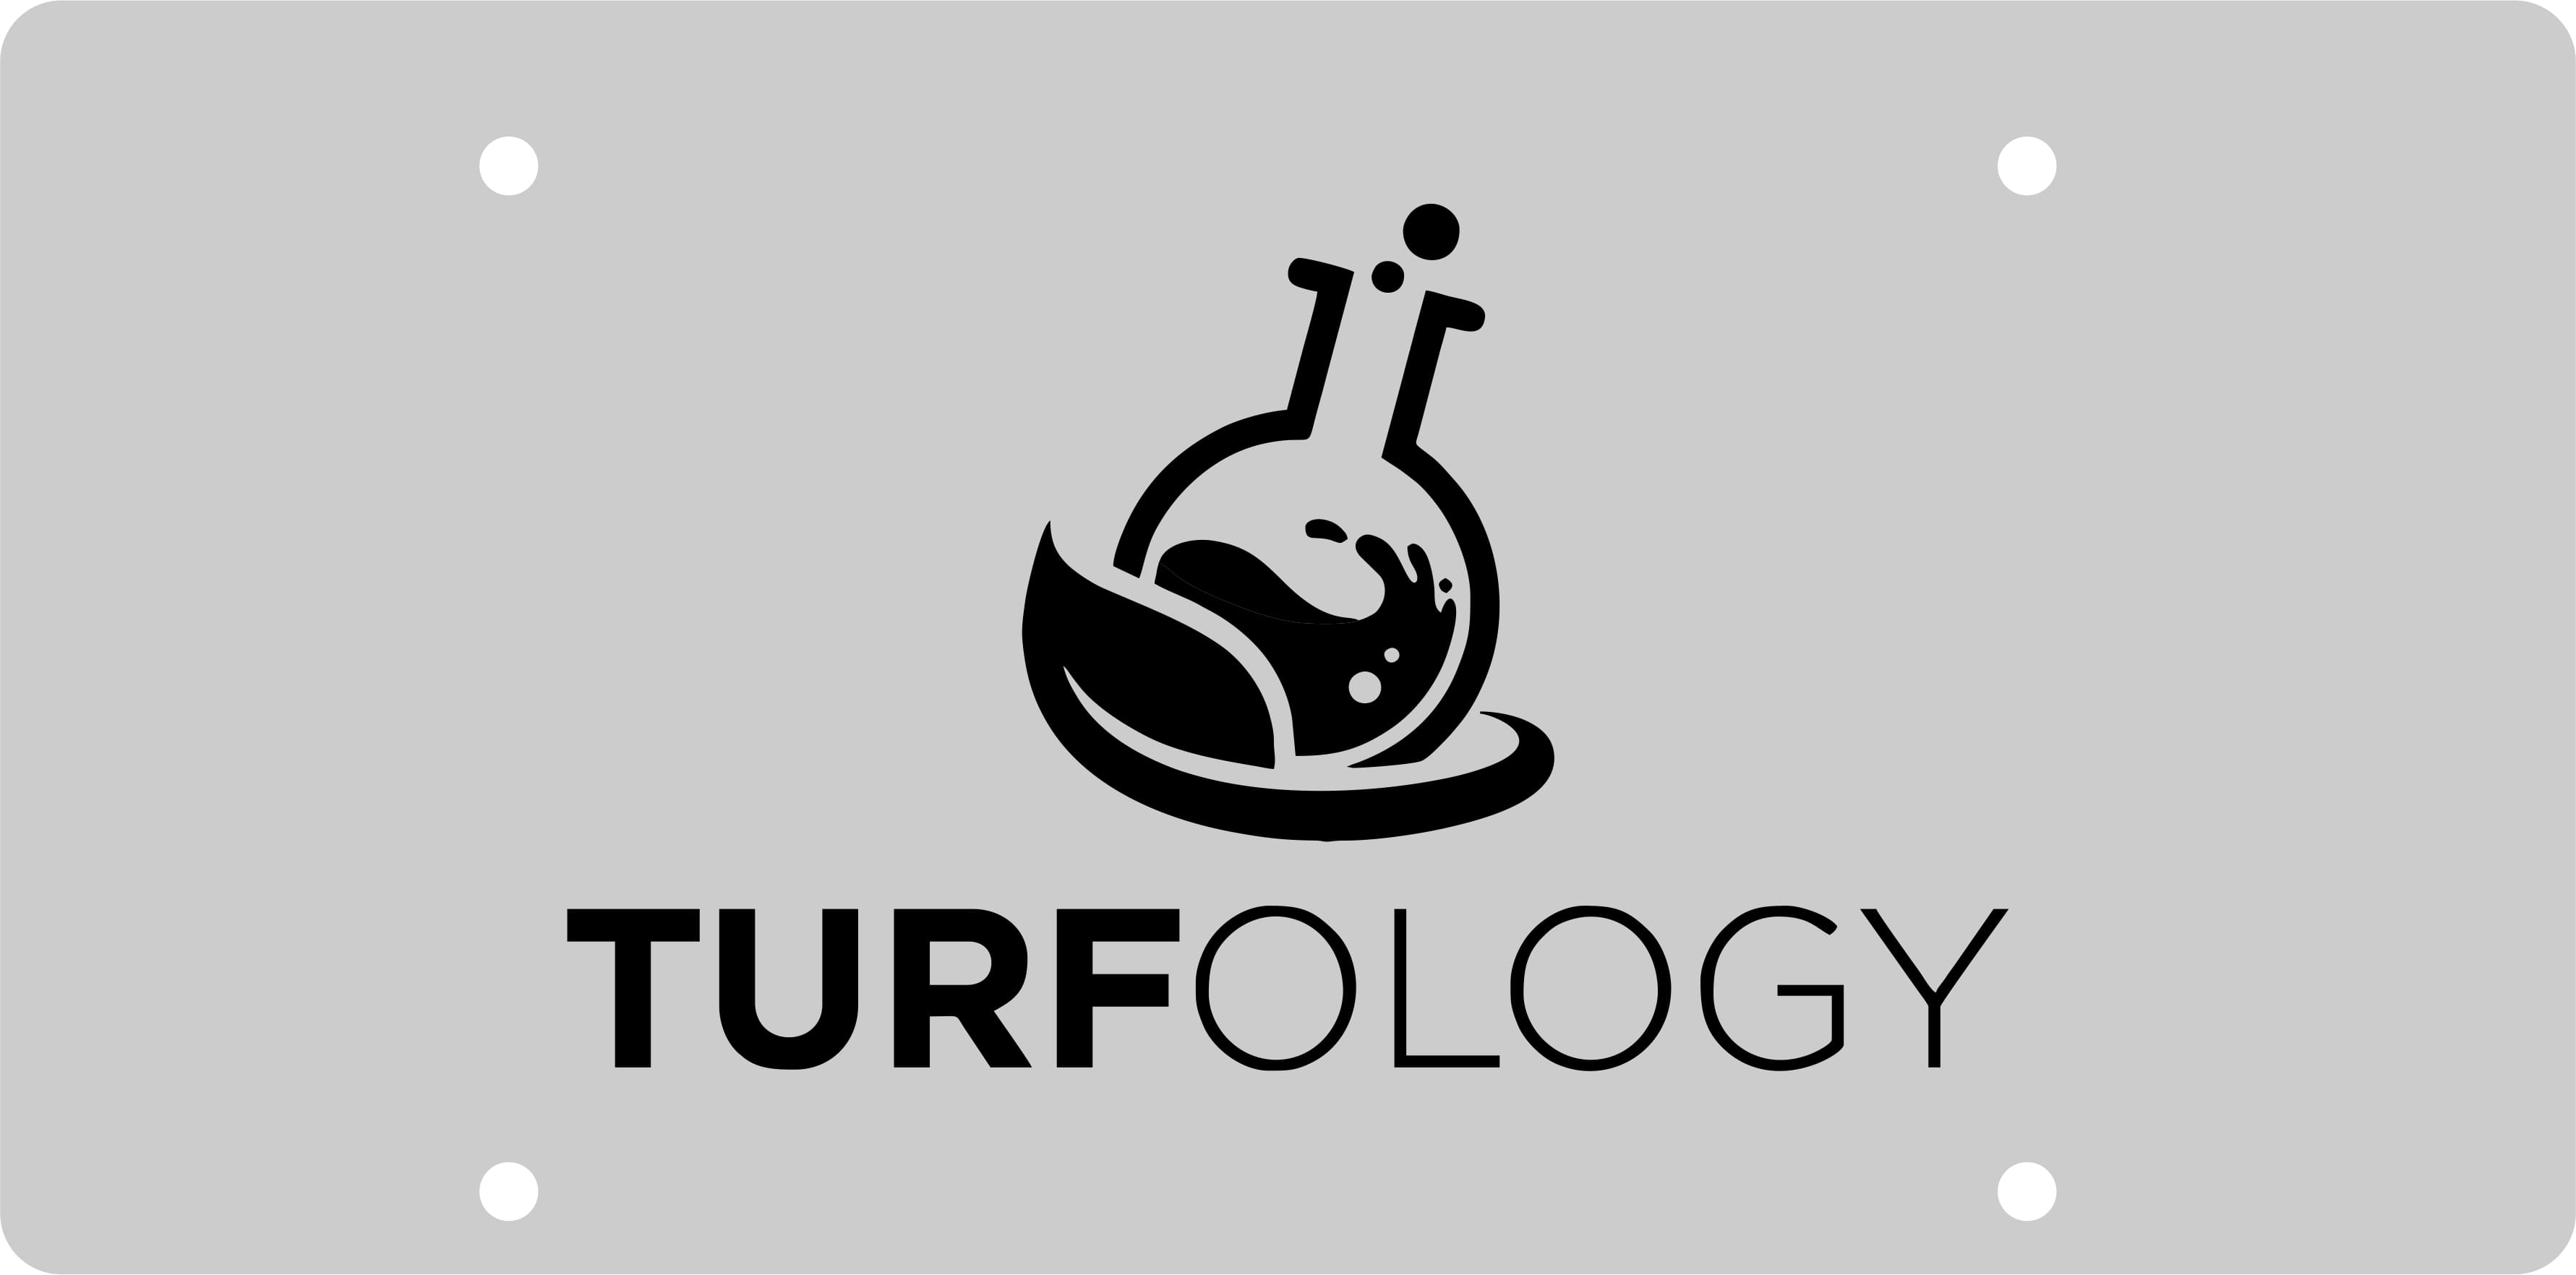 Turfology - Custom License plate